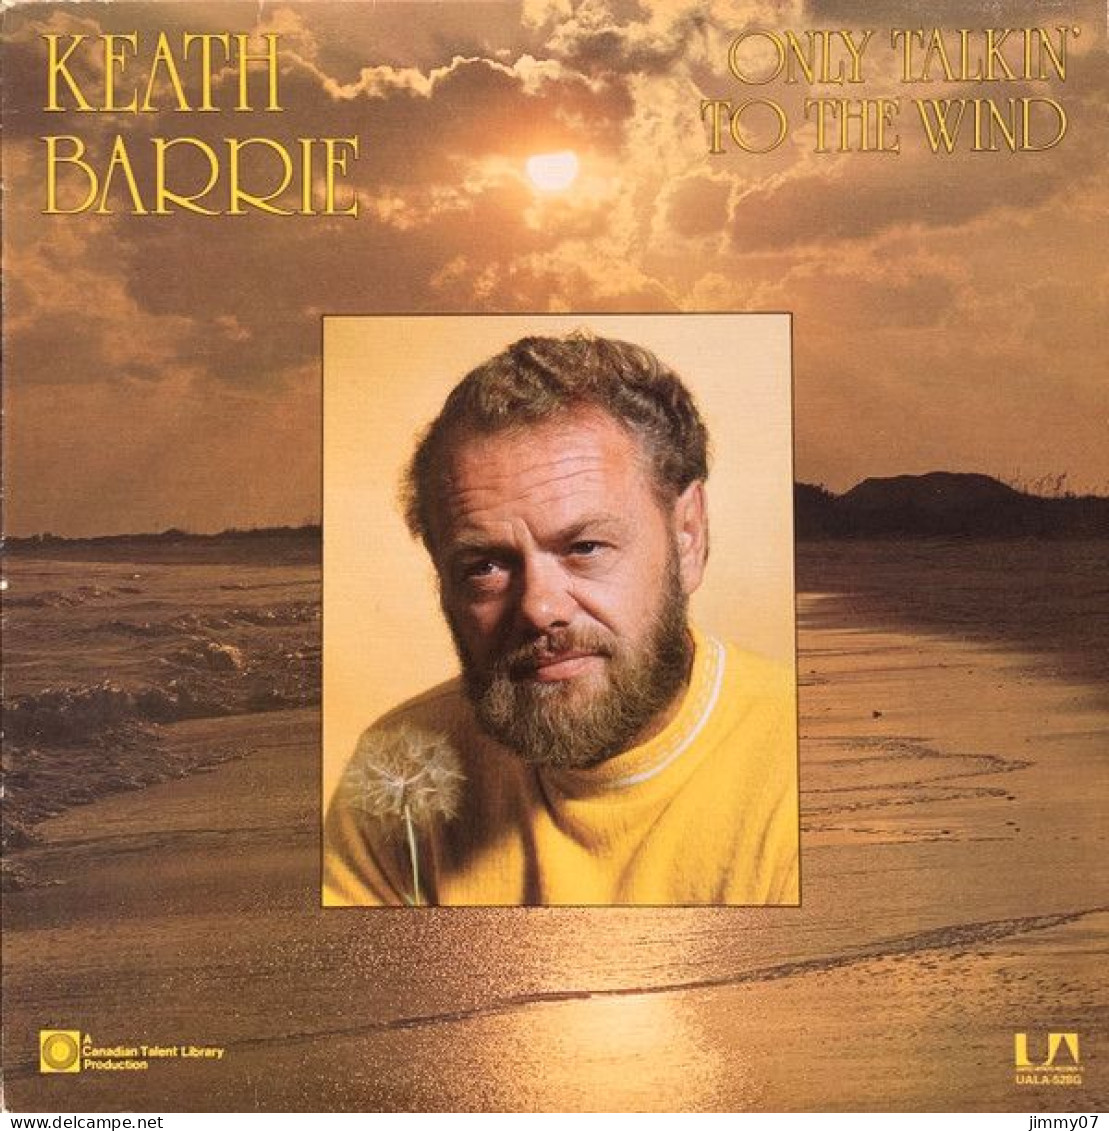 Keath Barrie - Only Talkin' To The Wind (LP, Album) - Disco, Pop